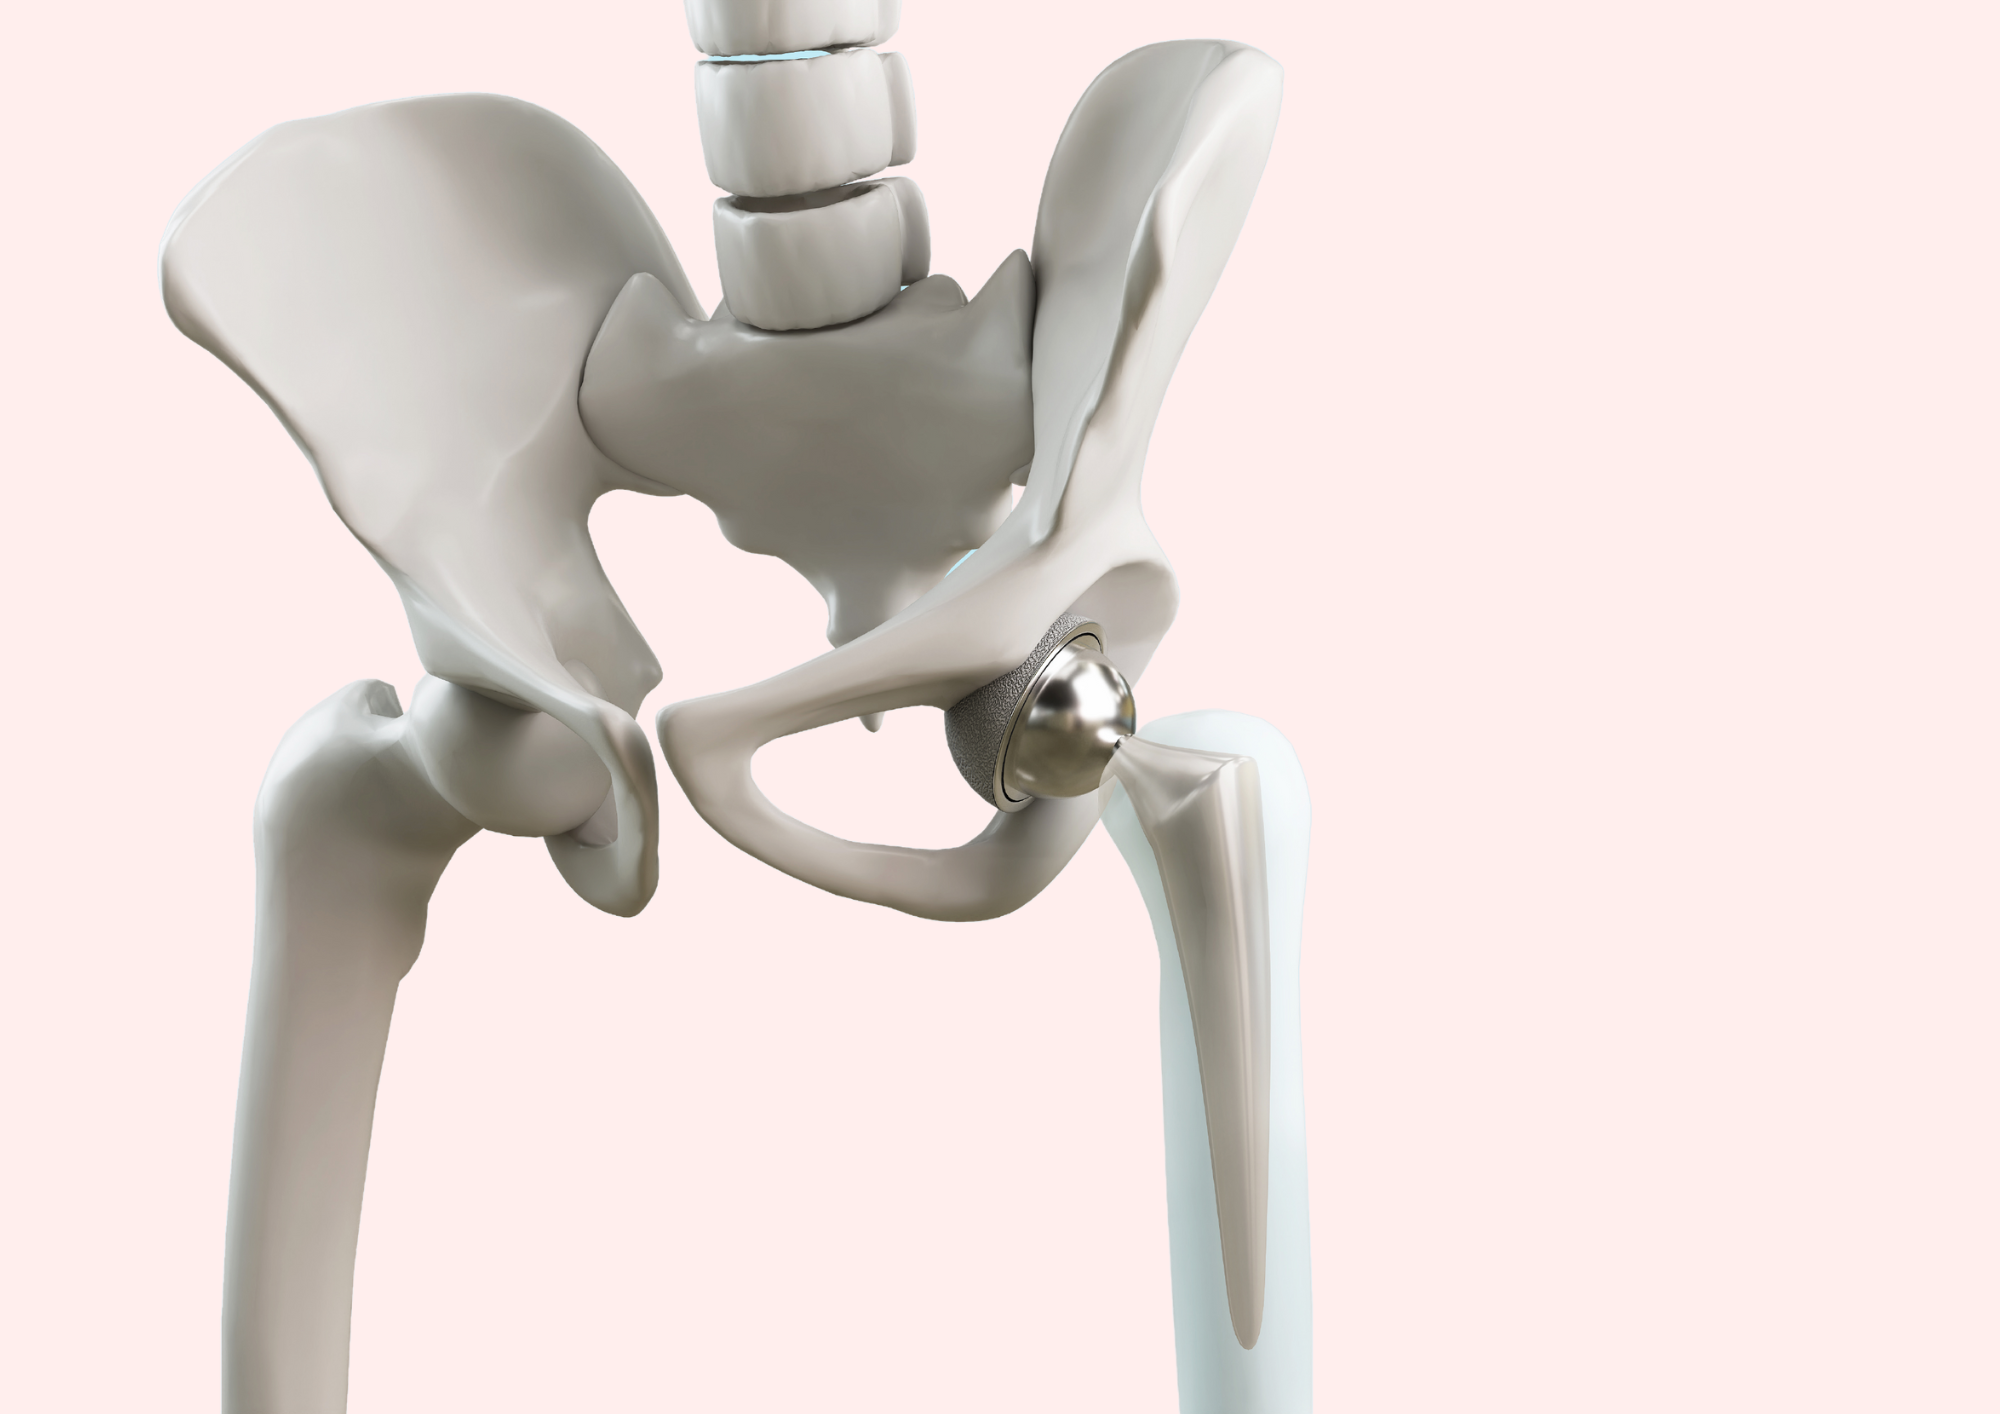 Artificial hip joint.